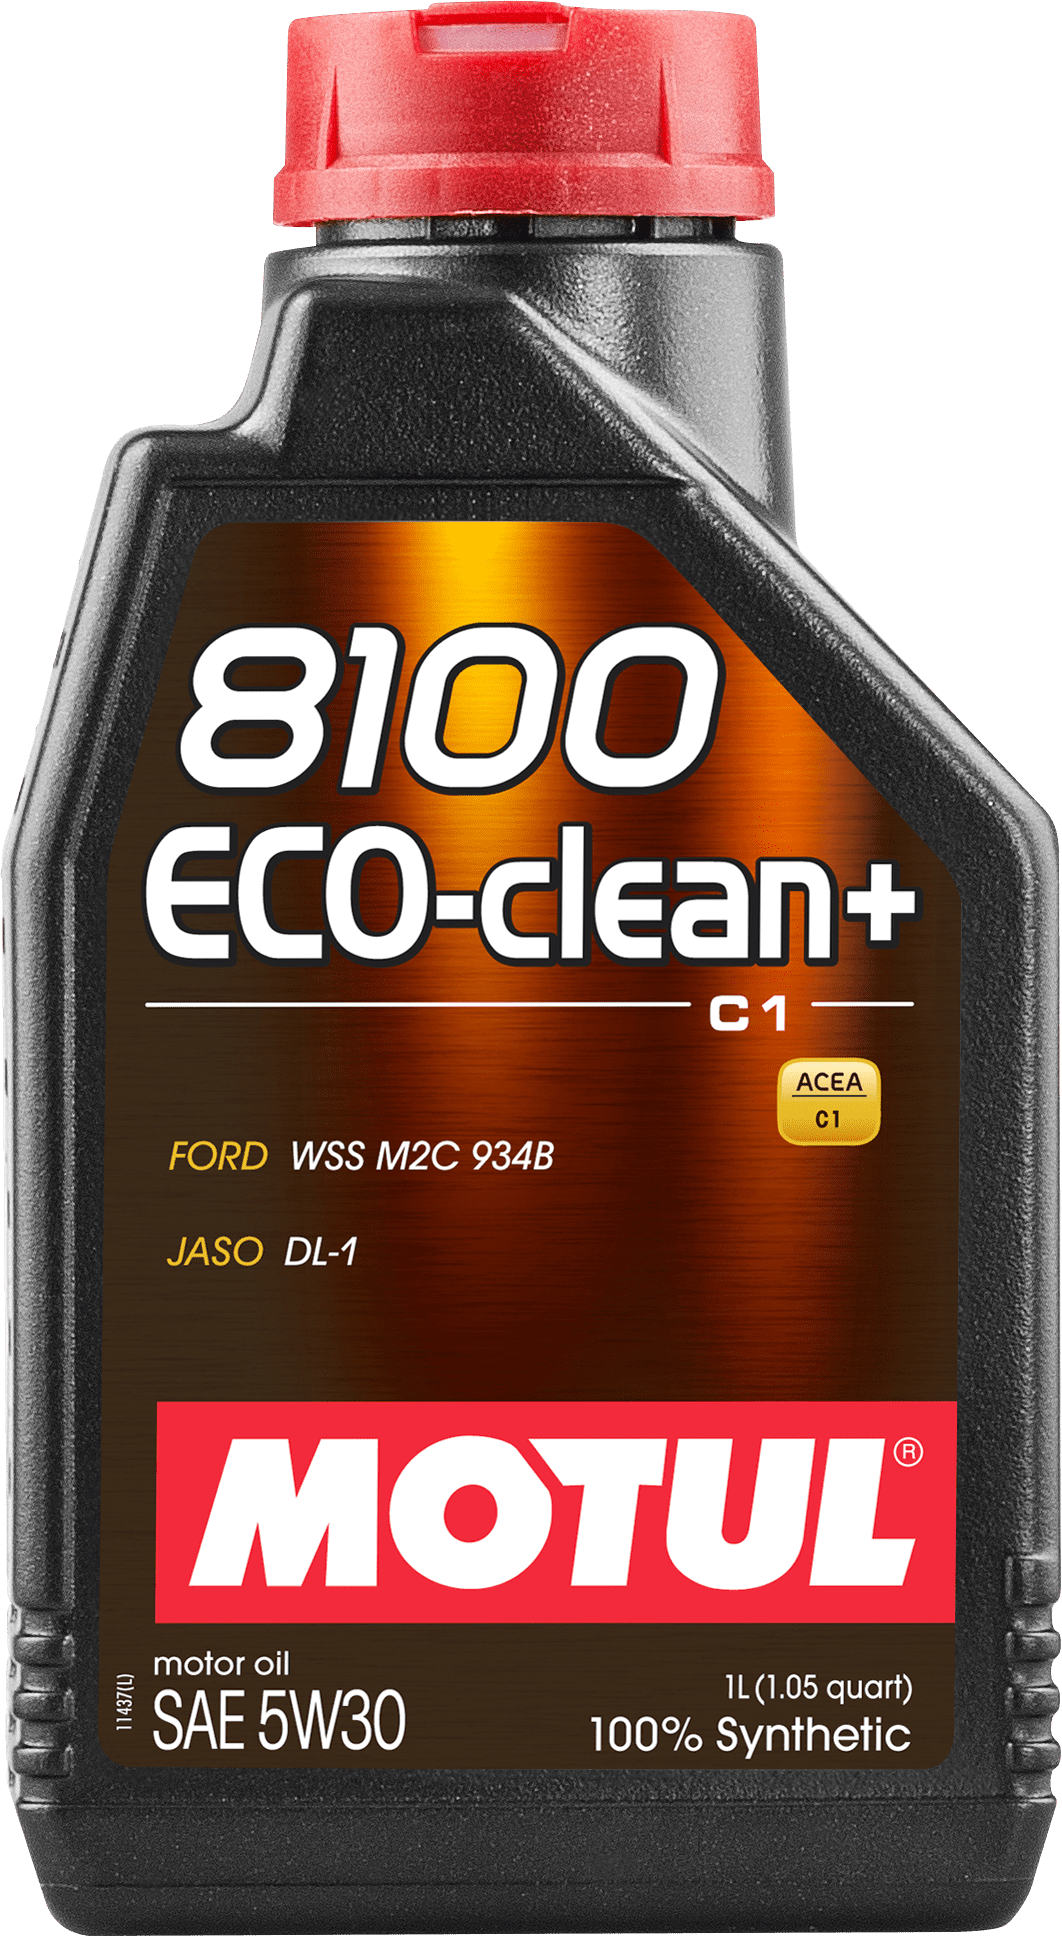 Motul 8100 ECO-clean+ 5W-30, 1 lt